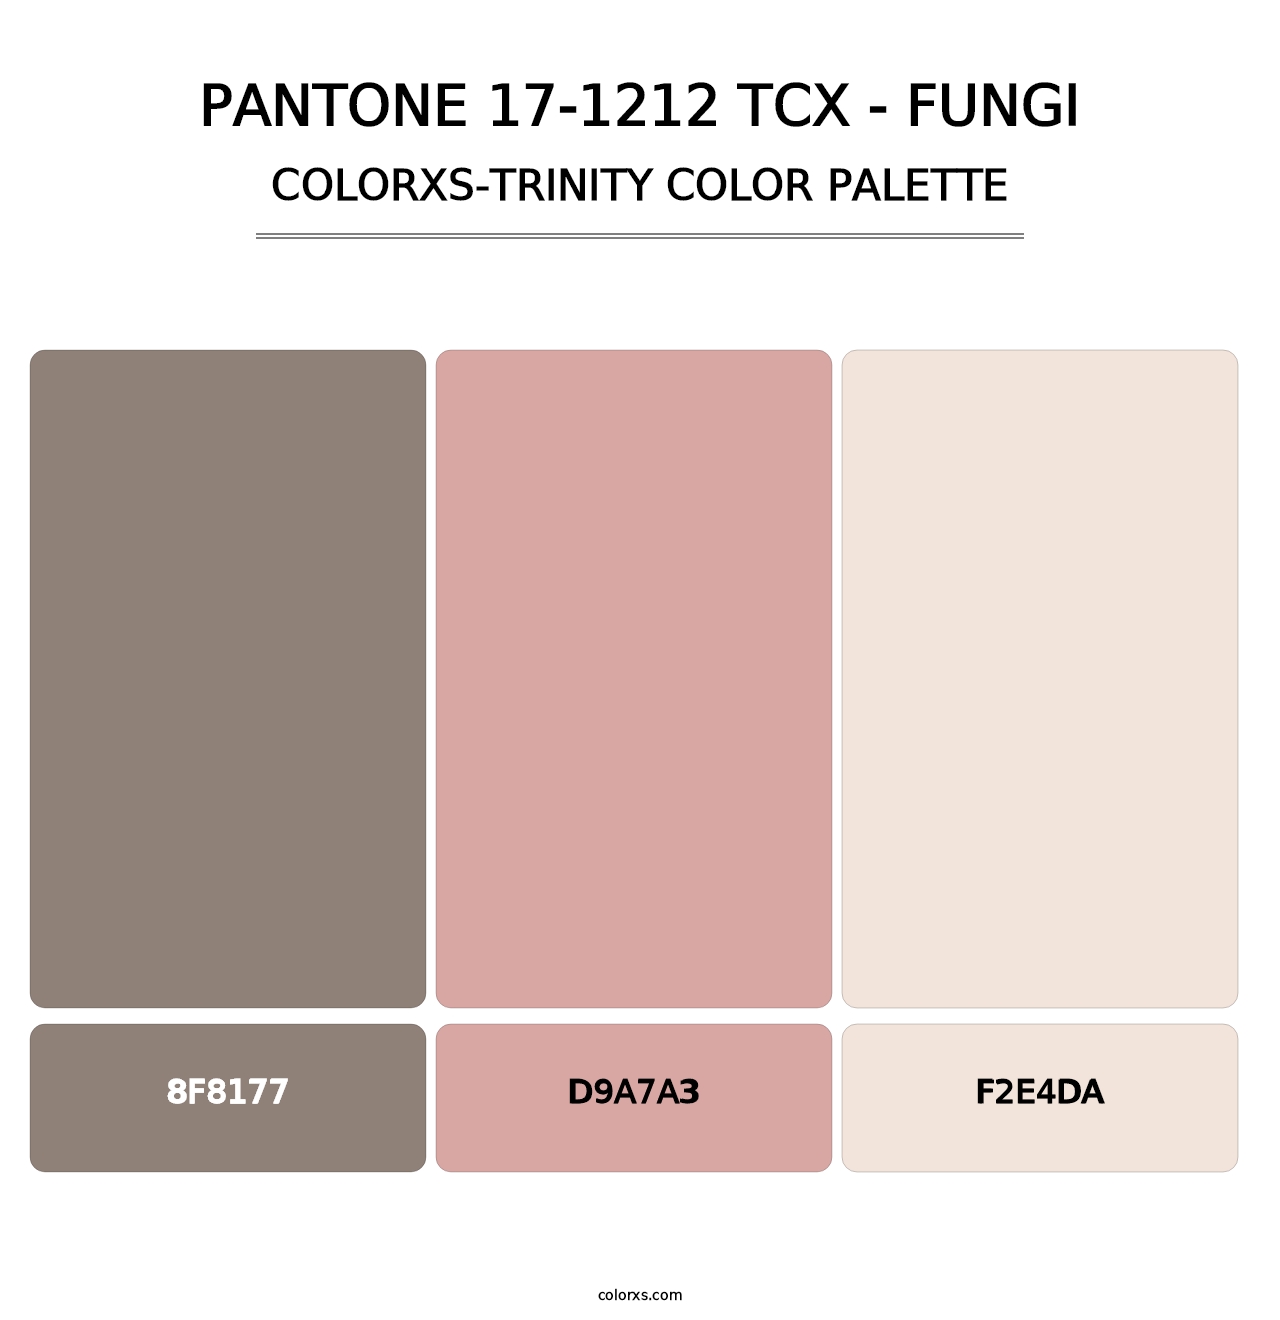 PANTONE 17-1212 TCX - Fungi - Colorxs Trinity Palette